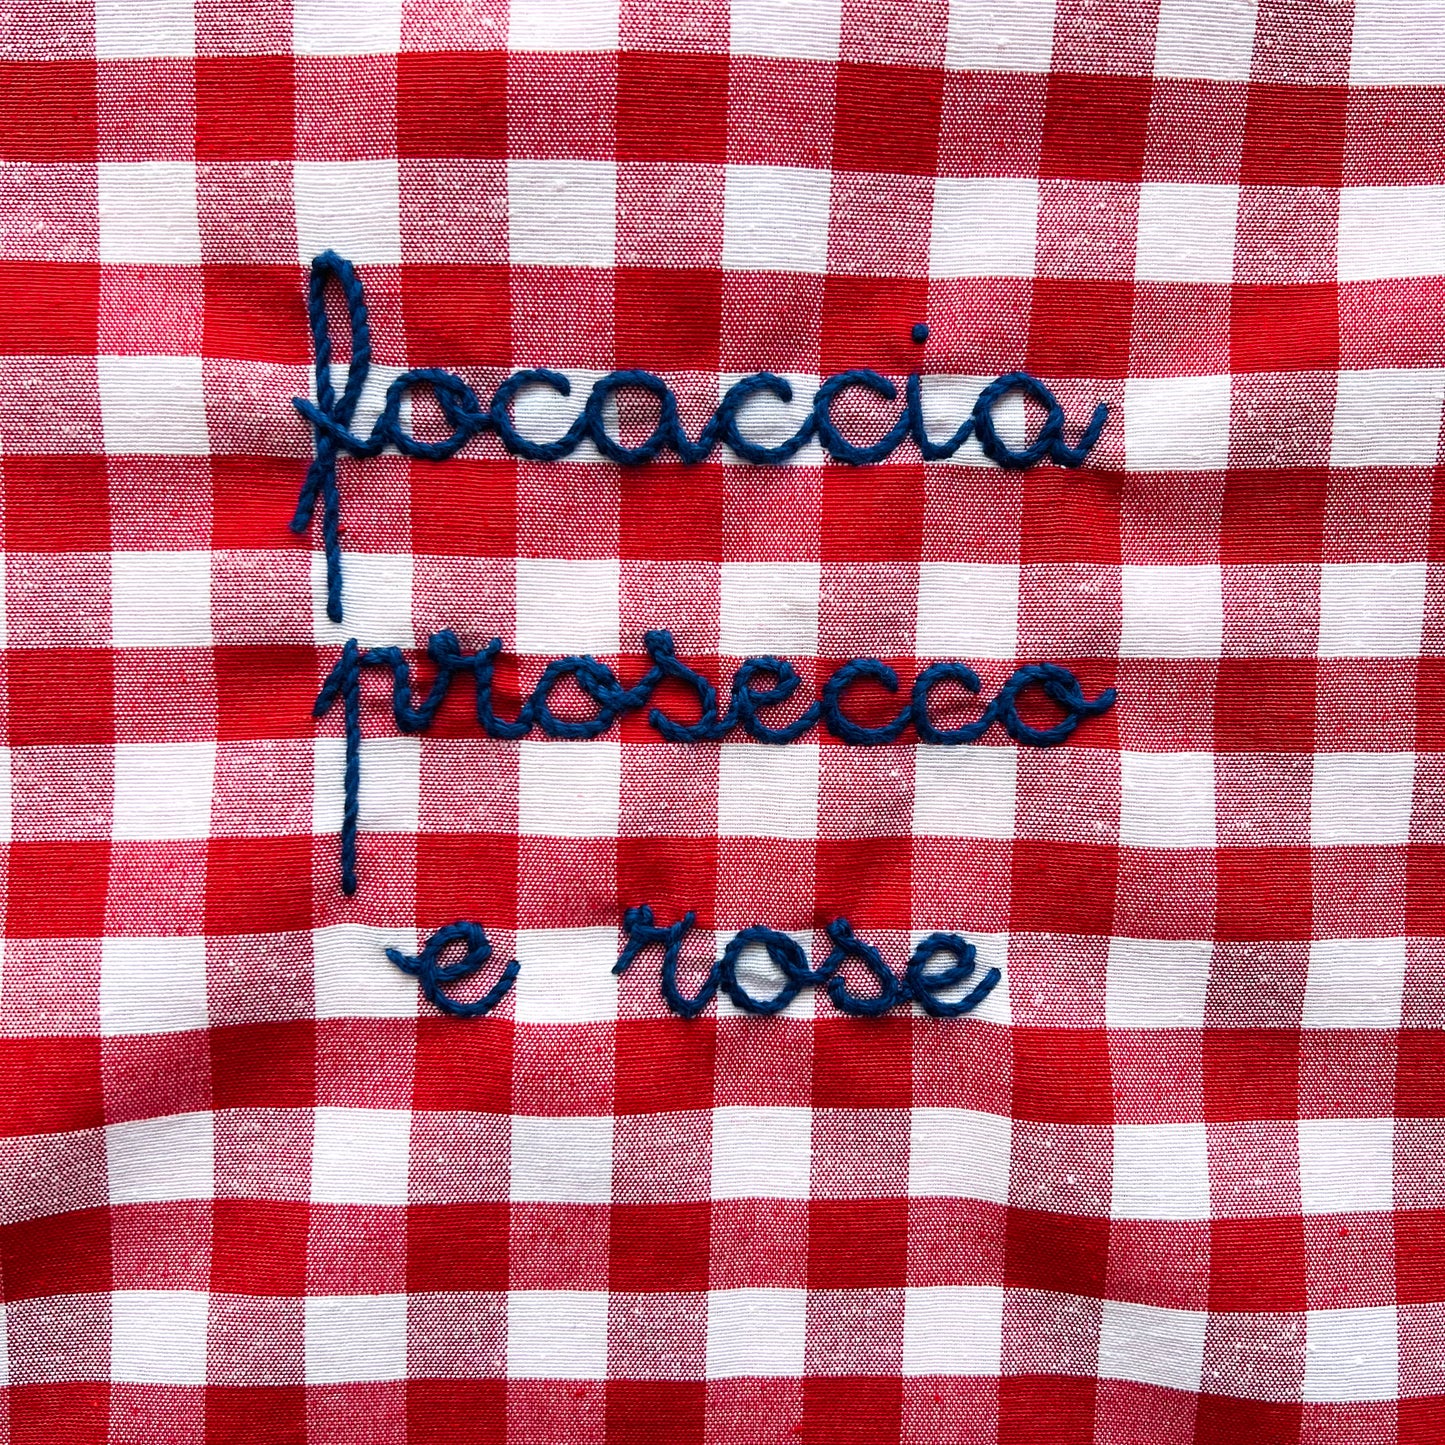 shopping bag "focaccia prosecco e rose" vichy rosso ricamata a mano con manici volants